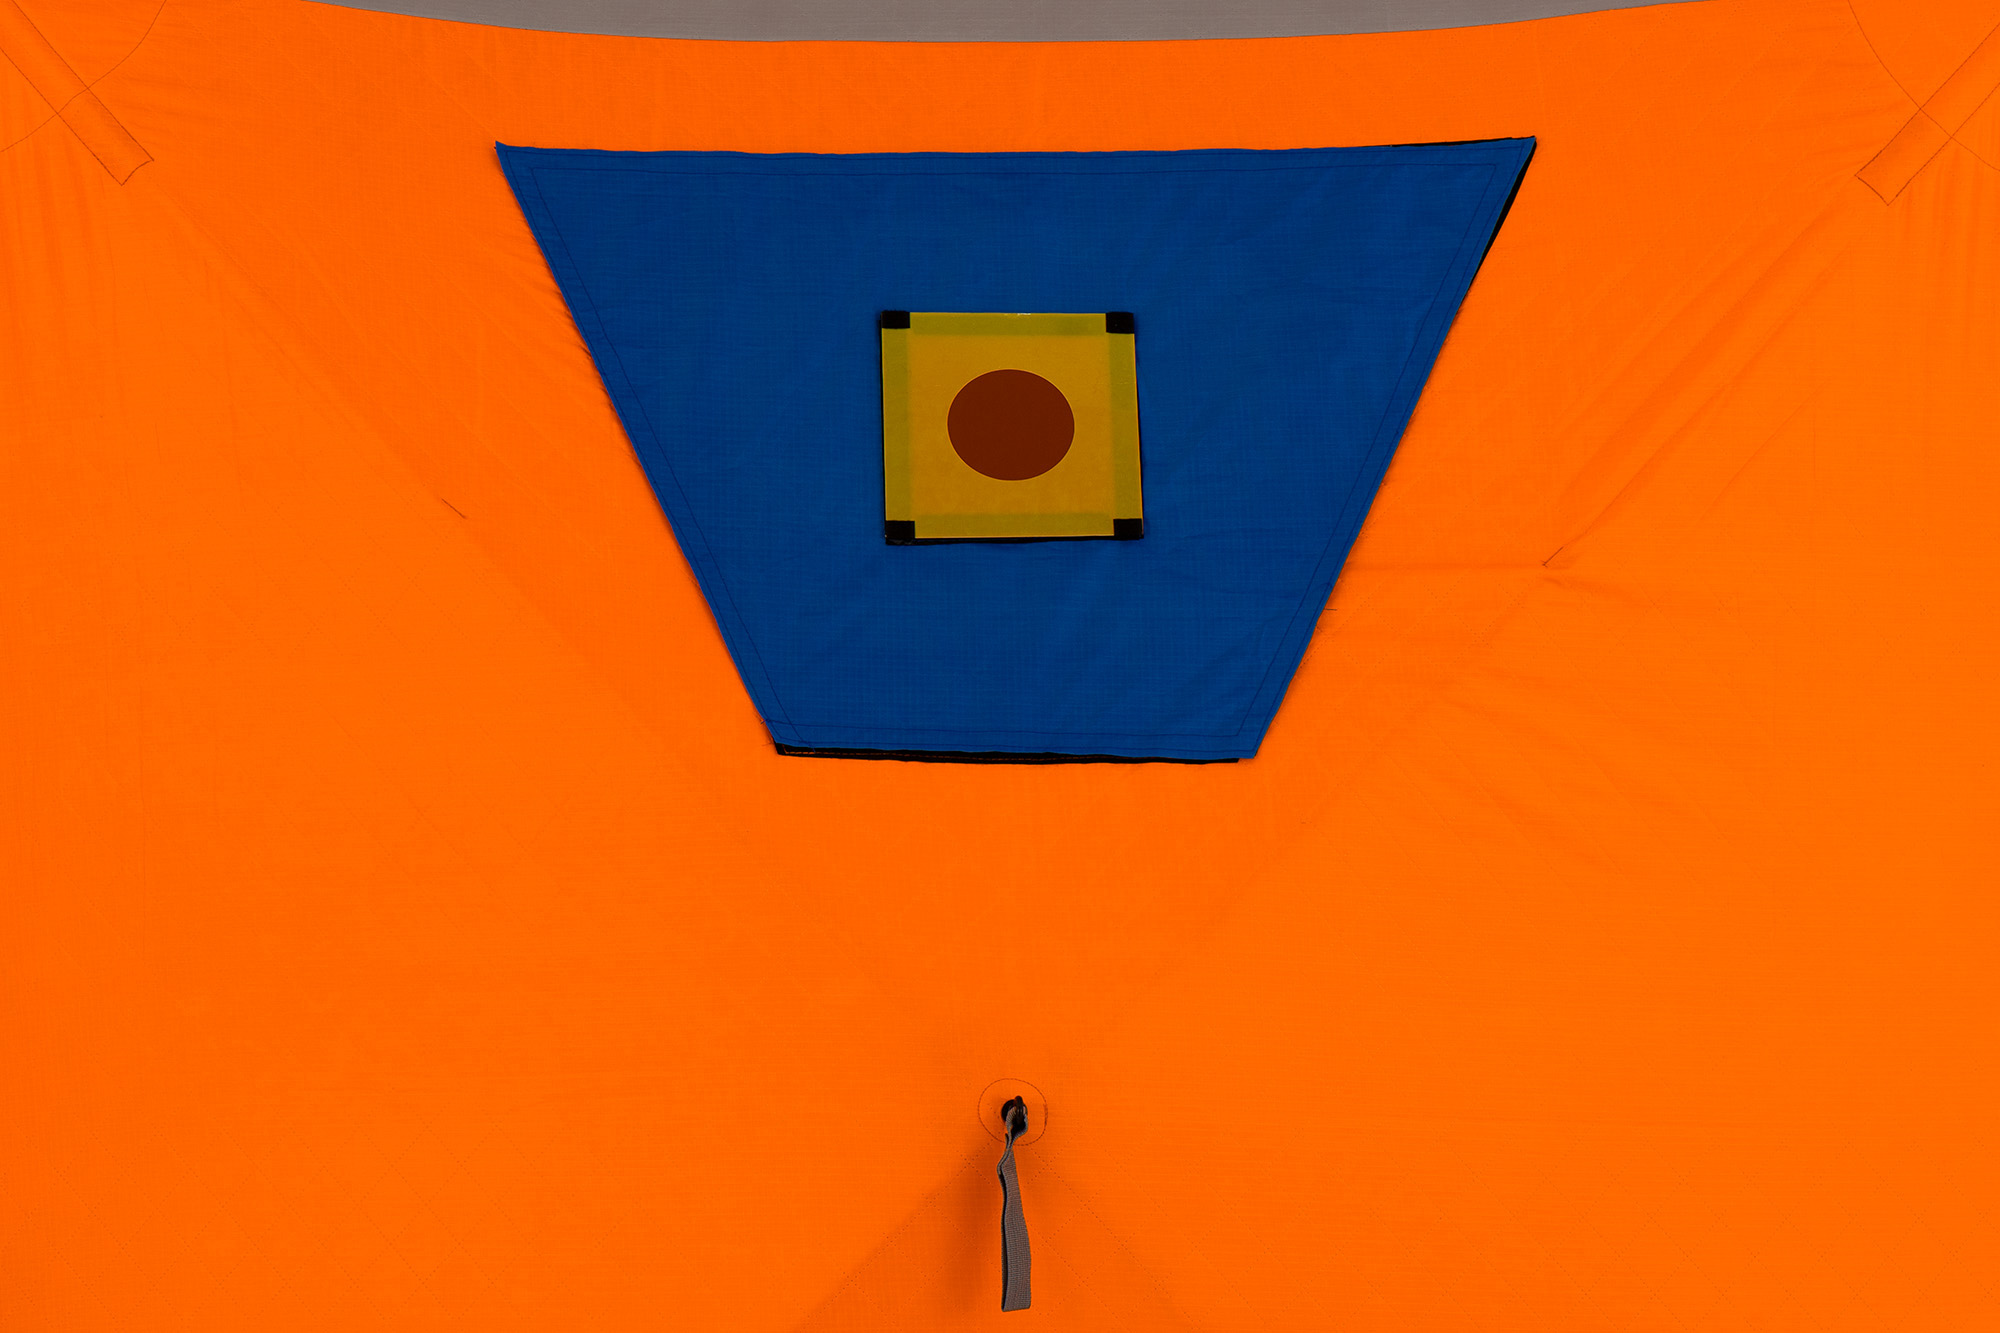 Палатка Куб "CONDOR" зимняя утепленная 6 сторон, 3,6 х 3,2 х 2,2  оранжевый